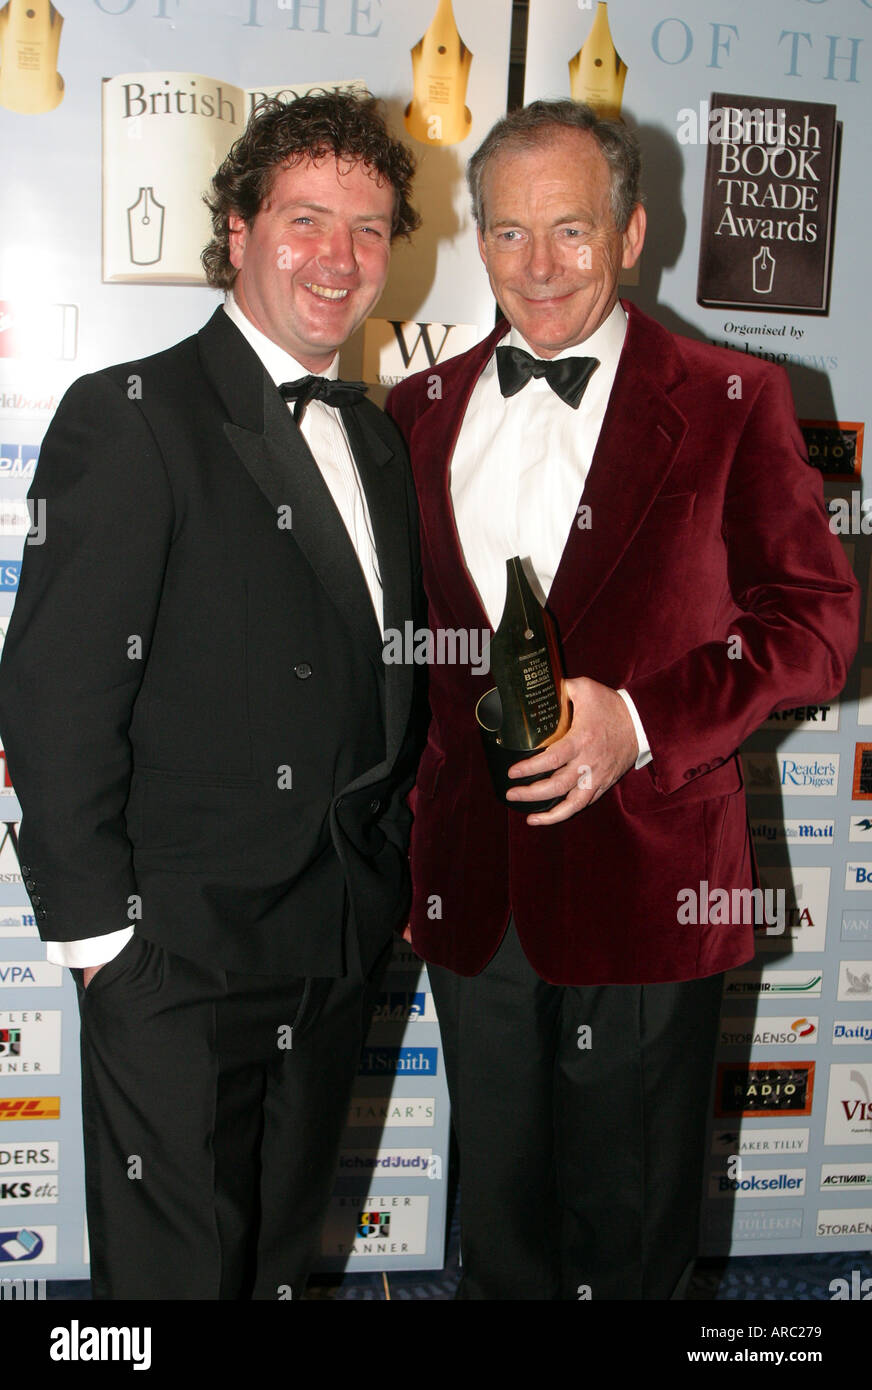 Michael Buerk and Diarmuid Gavin at the national book awards Stock Photo